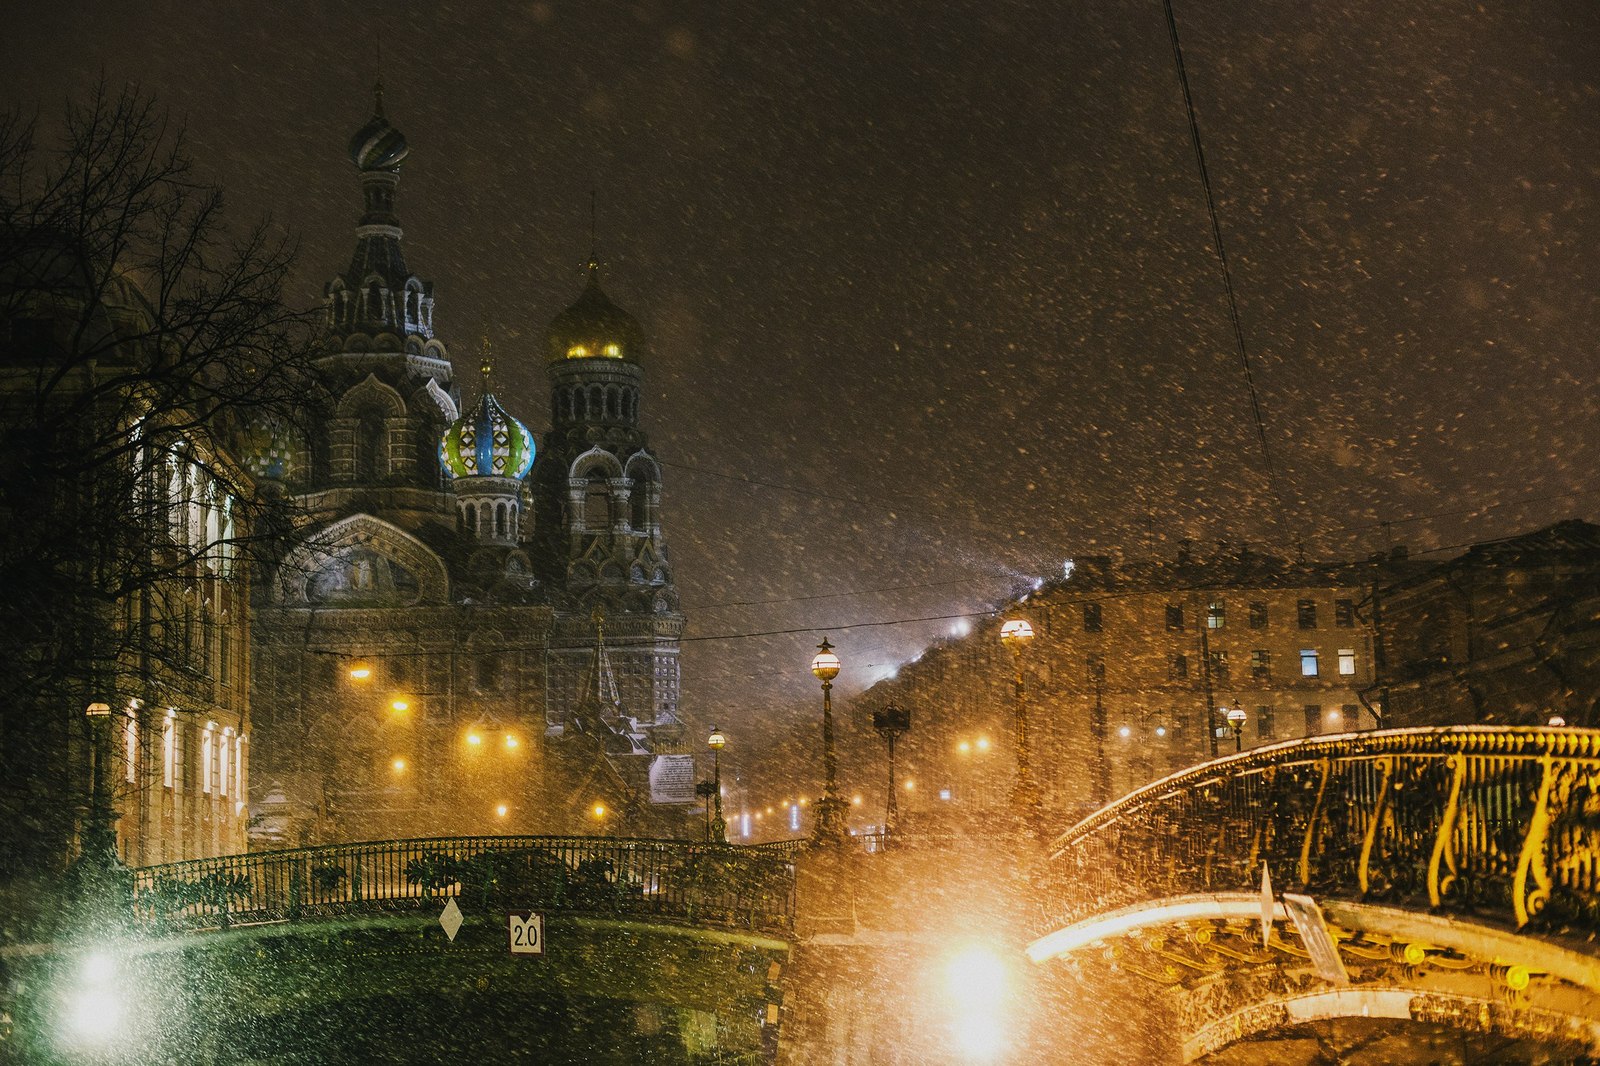 Снег над. Петербург снег ночь. Ночной заснеженный Питер. Ночной Питер в снегу. Зимний Санкт-Петербург ночью.